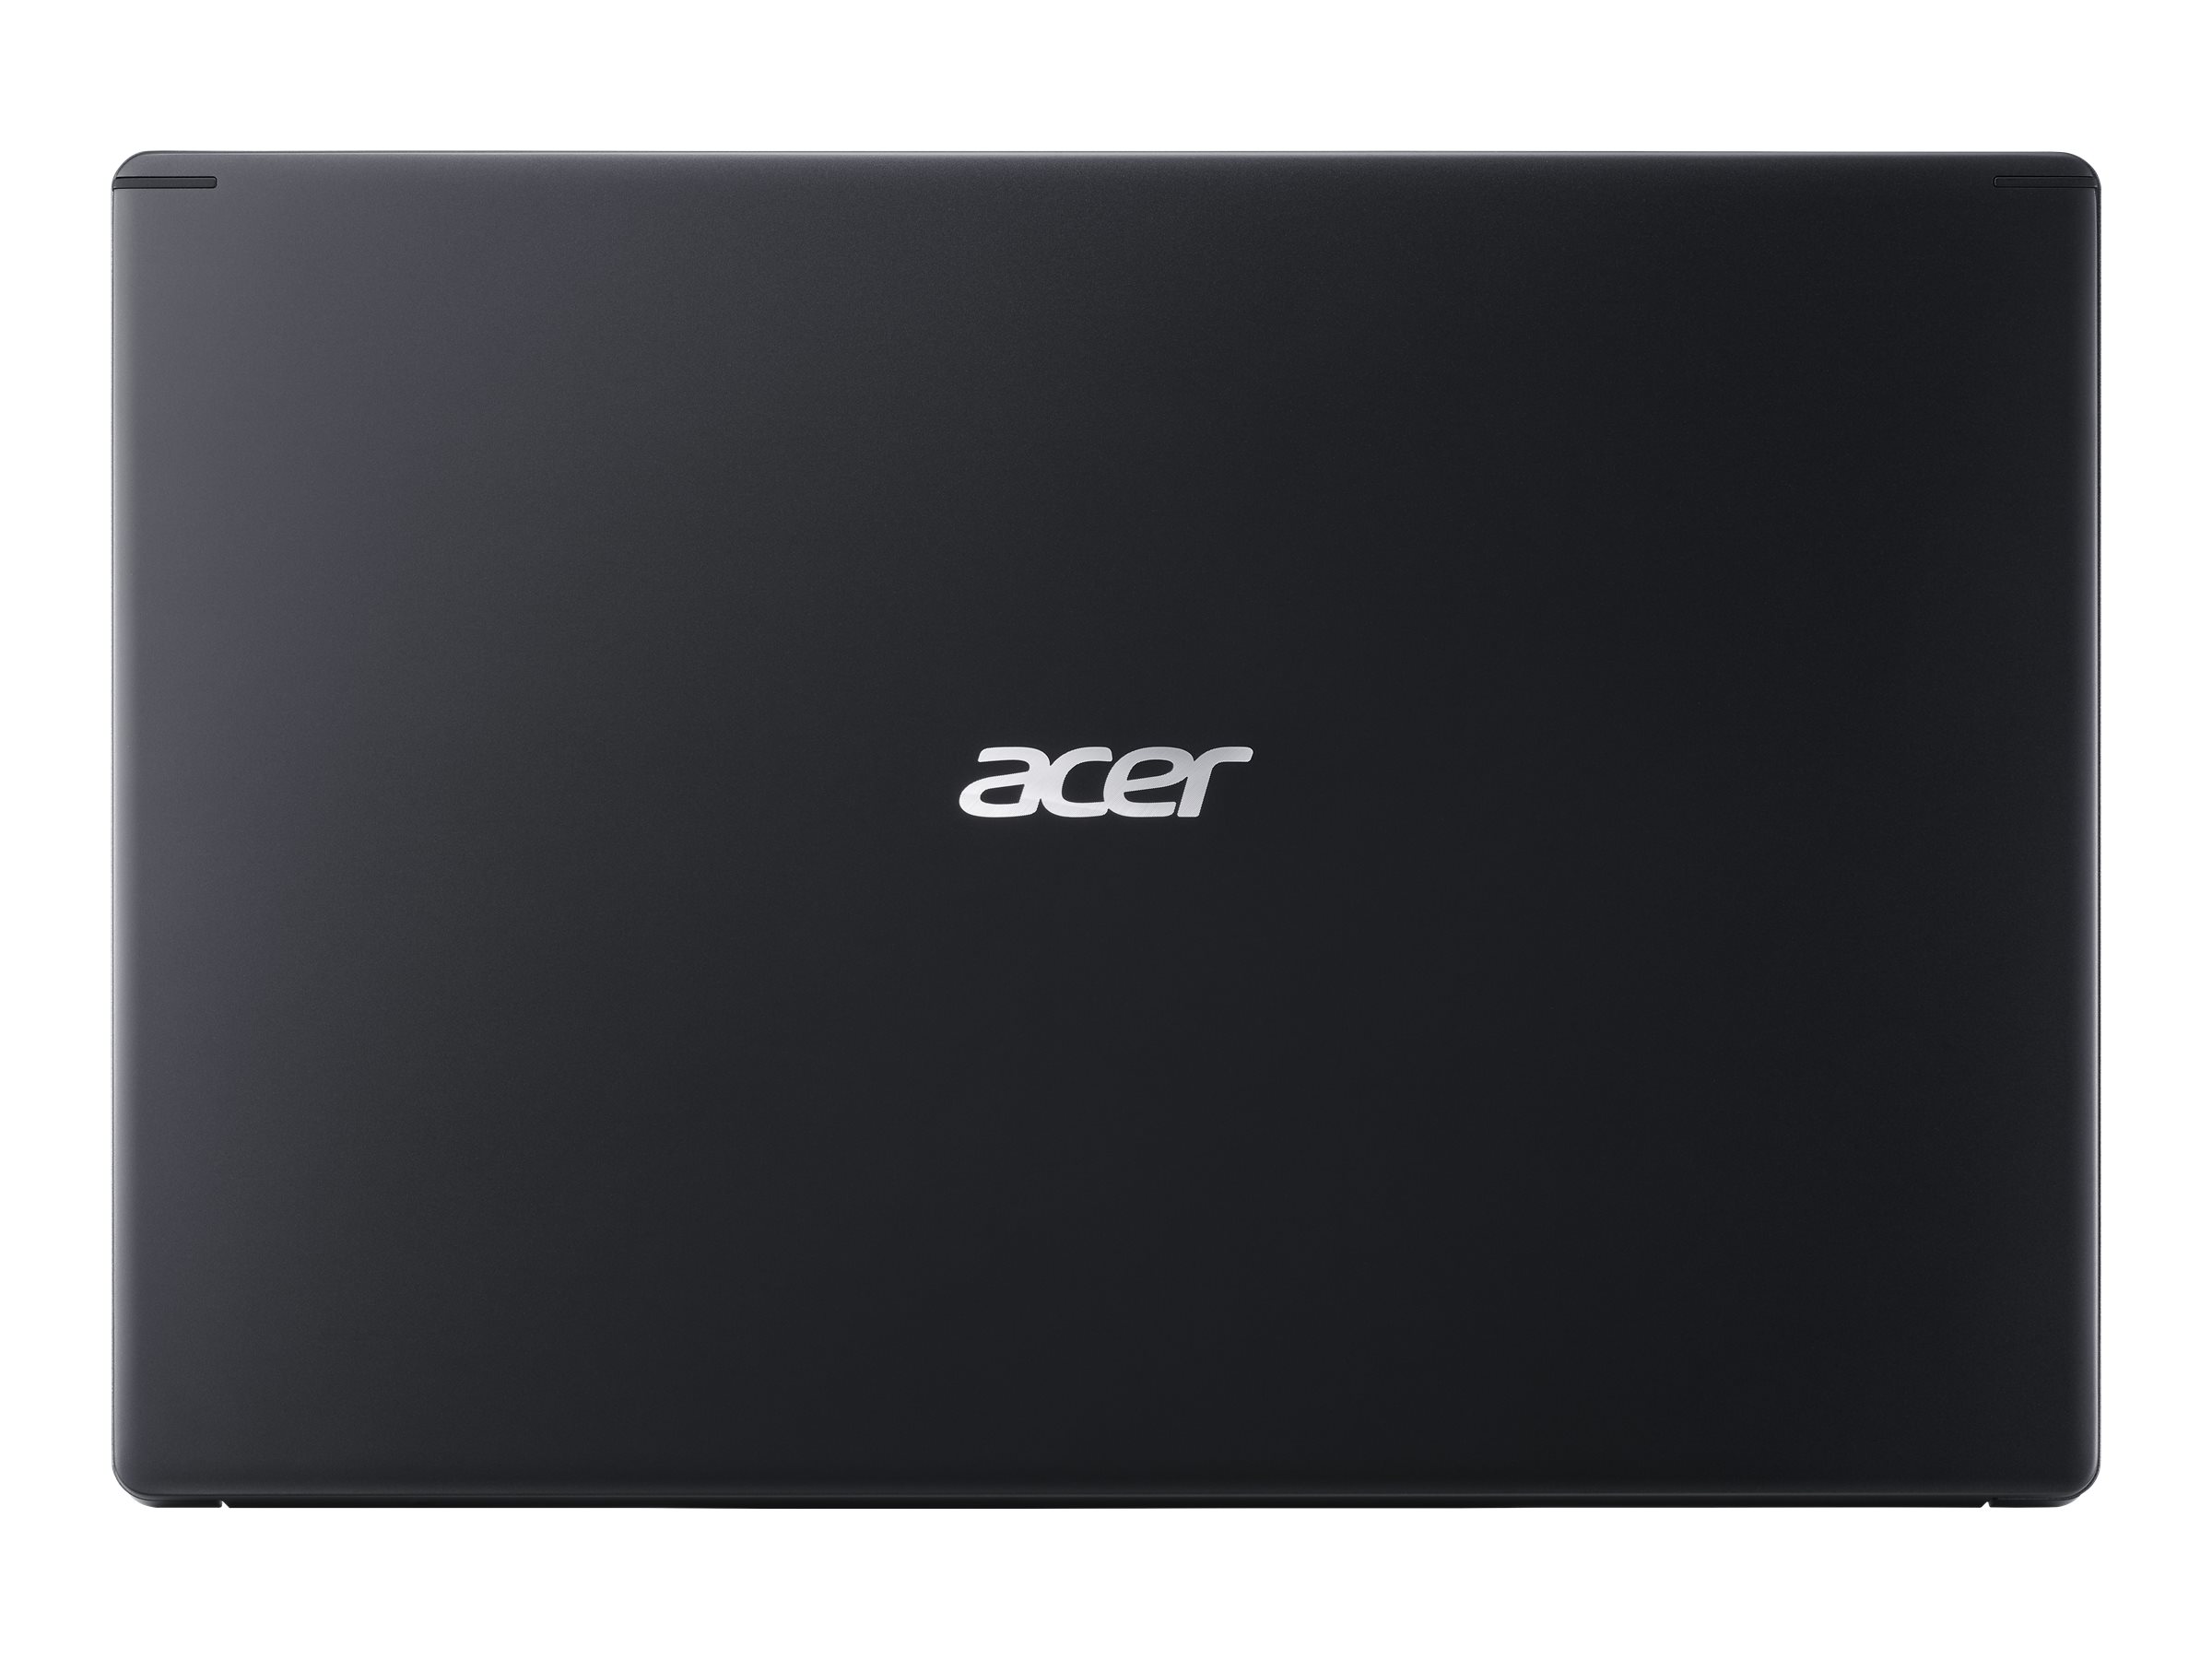 Acer Aspire 5 A515-44-R4M5 - AMD Ryzen 5 4500U / 2.3 GHz - Win 10 Home 64-bit - Radeon HD - 8 GB RAM - 512 GB SSD - 15.6" 1366 x 768 (HD) - Wi-Fi 5 - charcoal black - kbd: US Intl - image 5 of 10